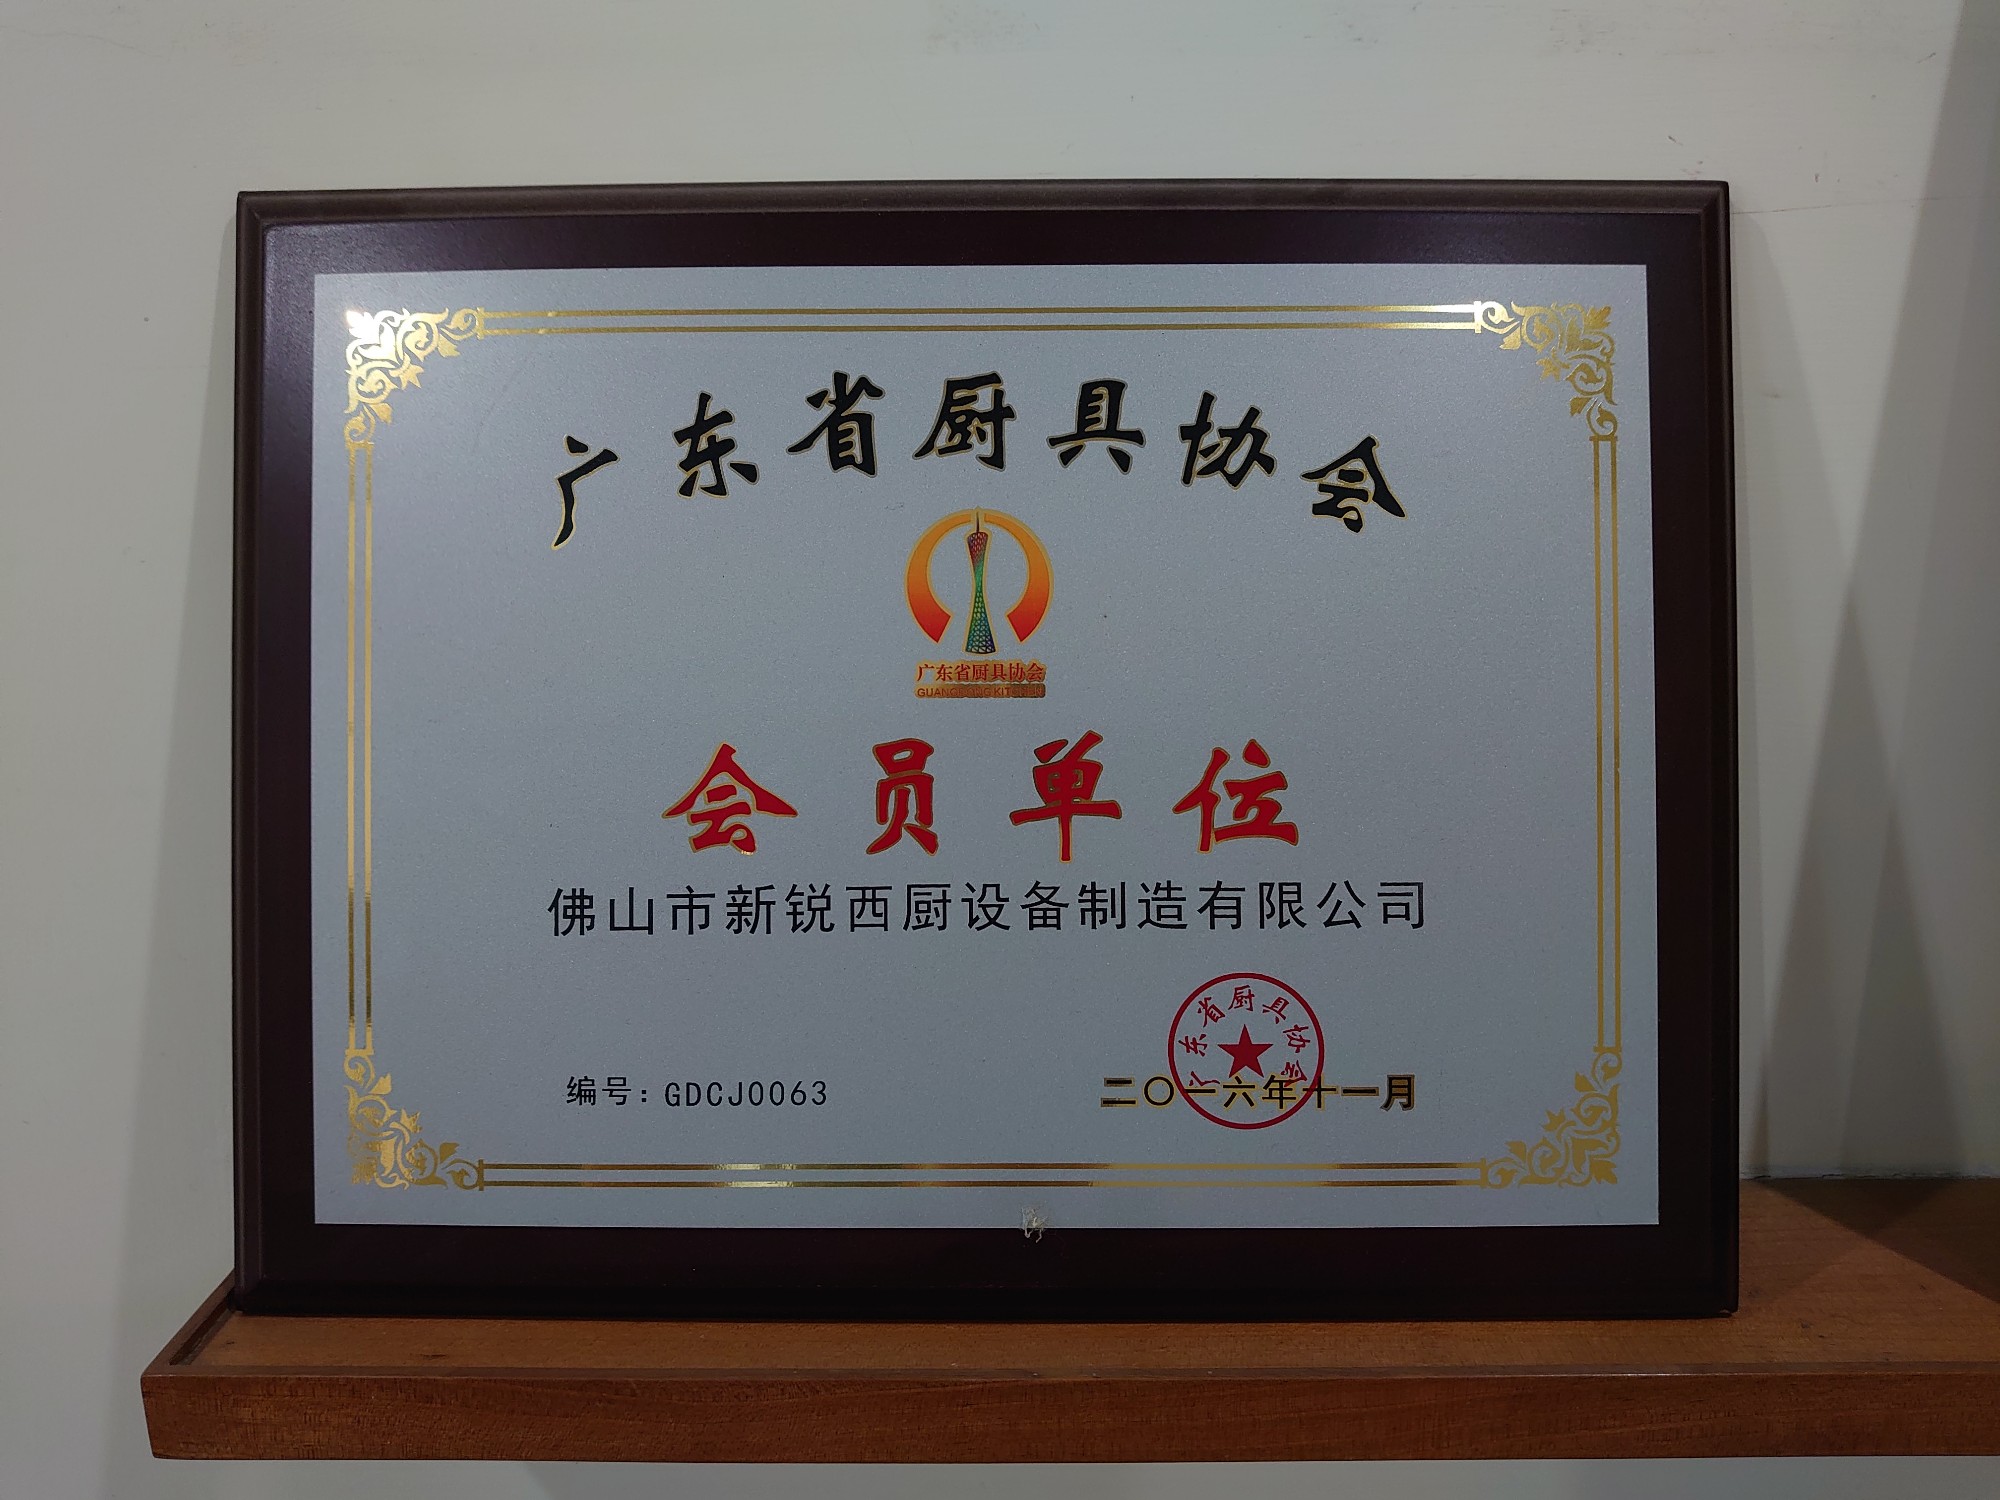 Guangdong Province Kitchenware Association